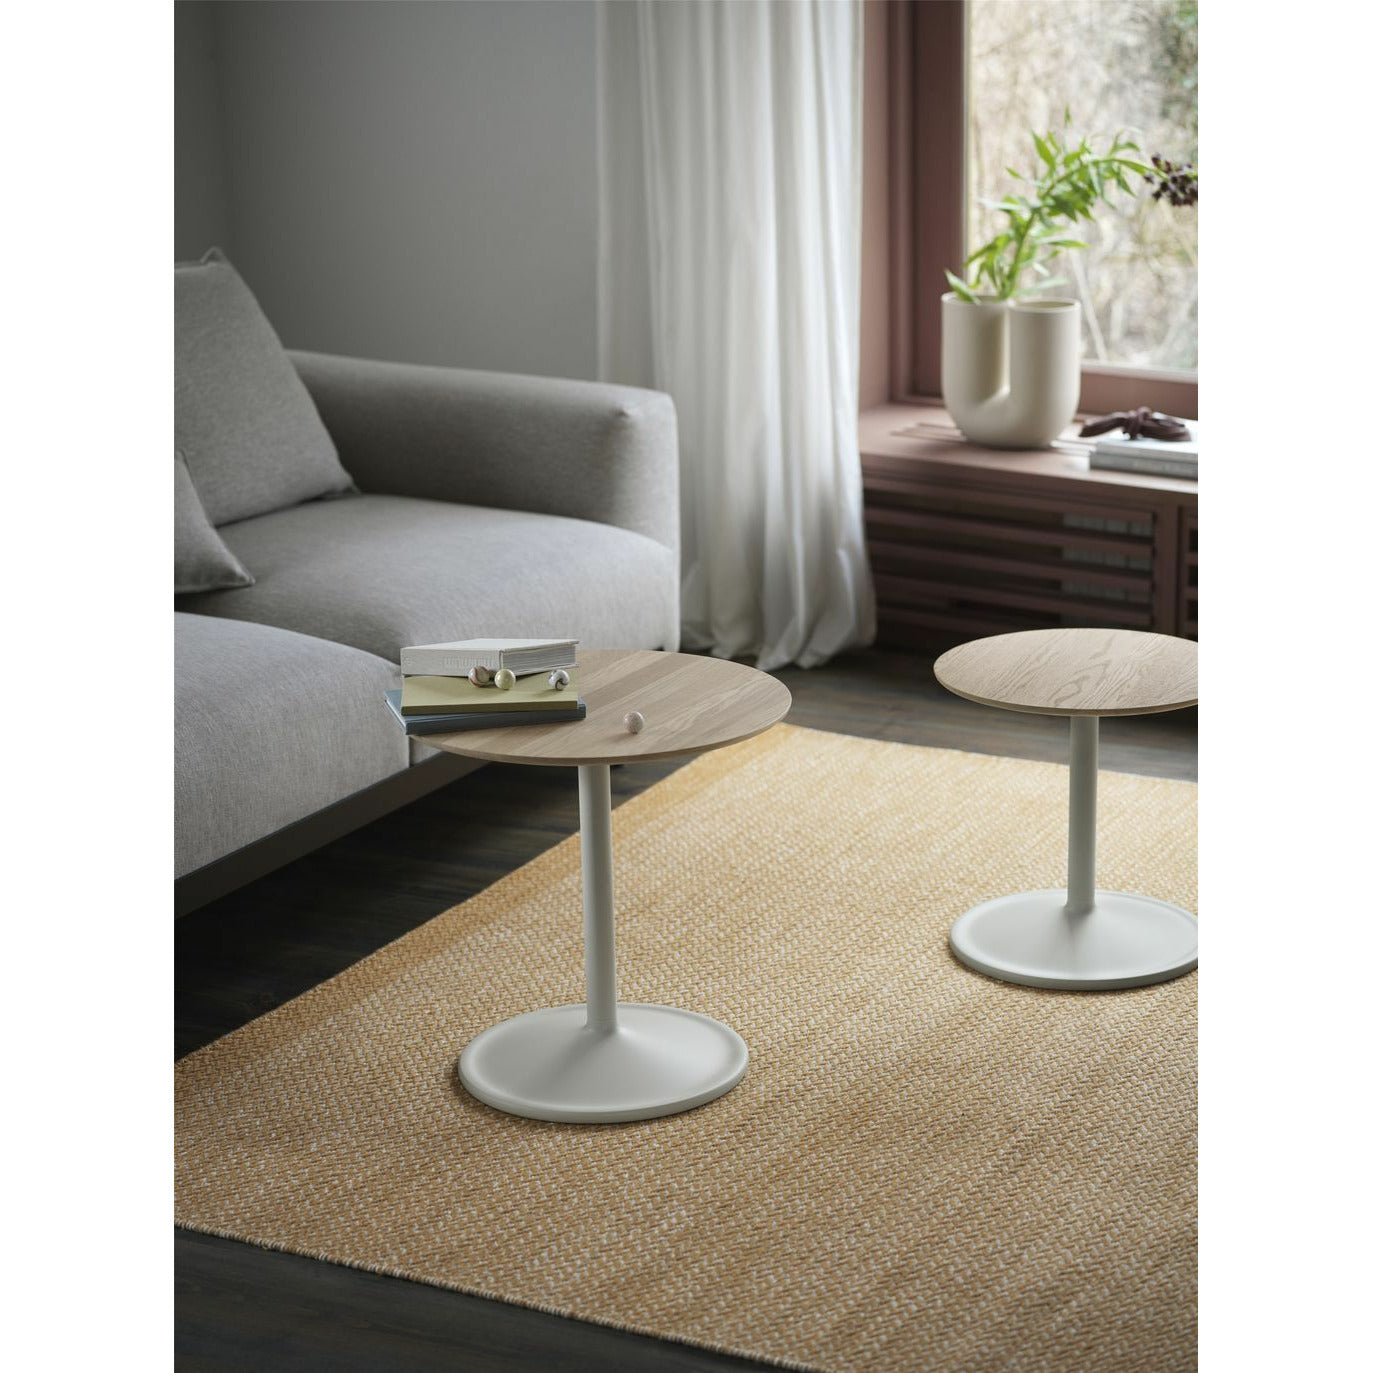 Muuto Soft Side Table øx H 41x48 Cm, Solid Oak/Off White